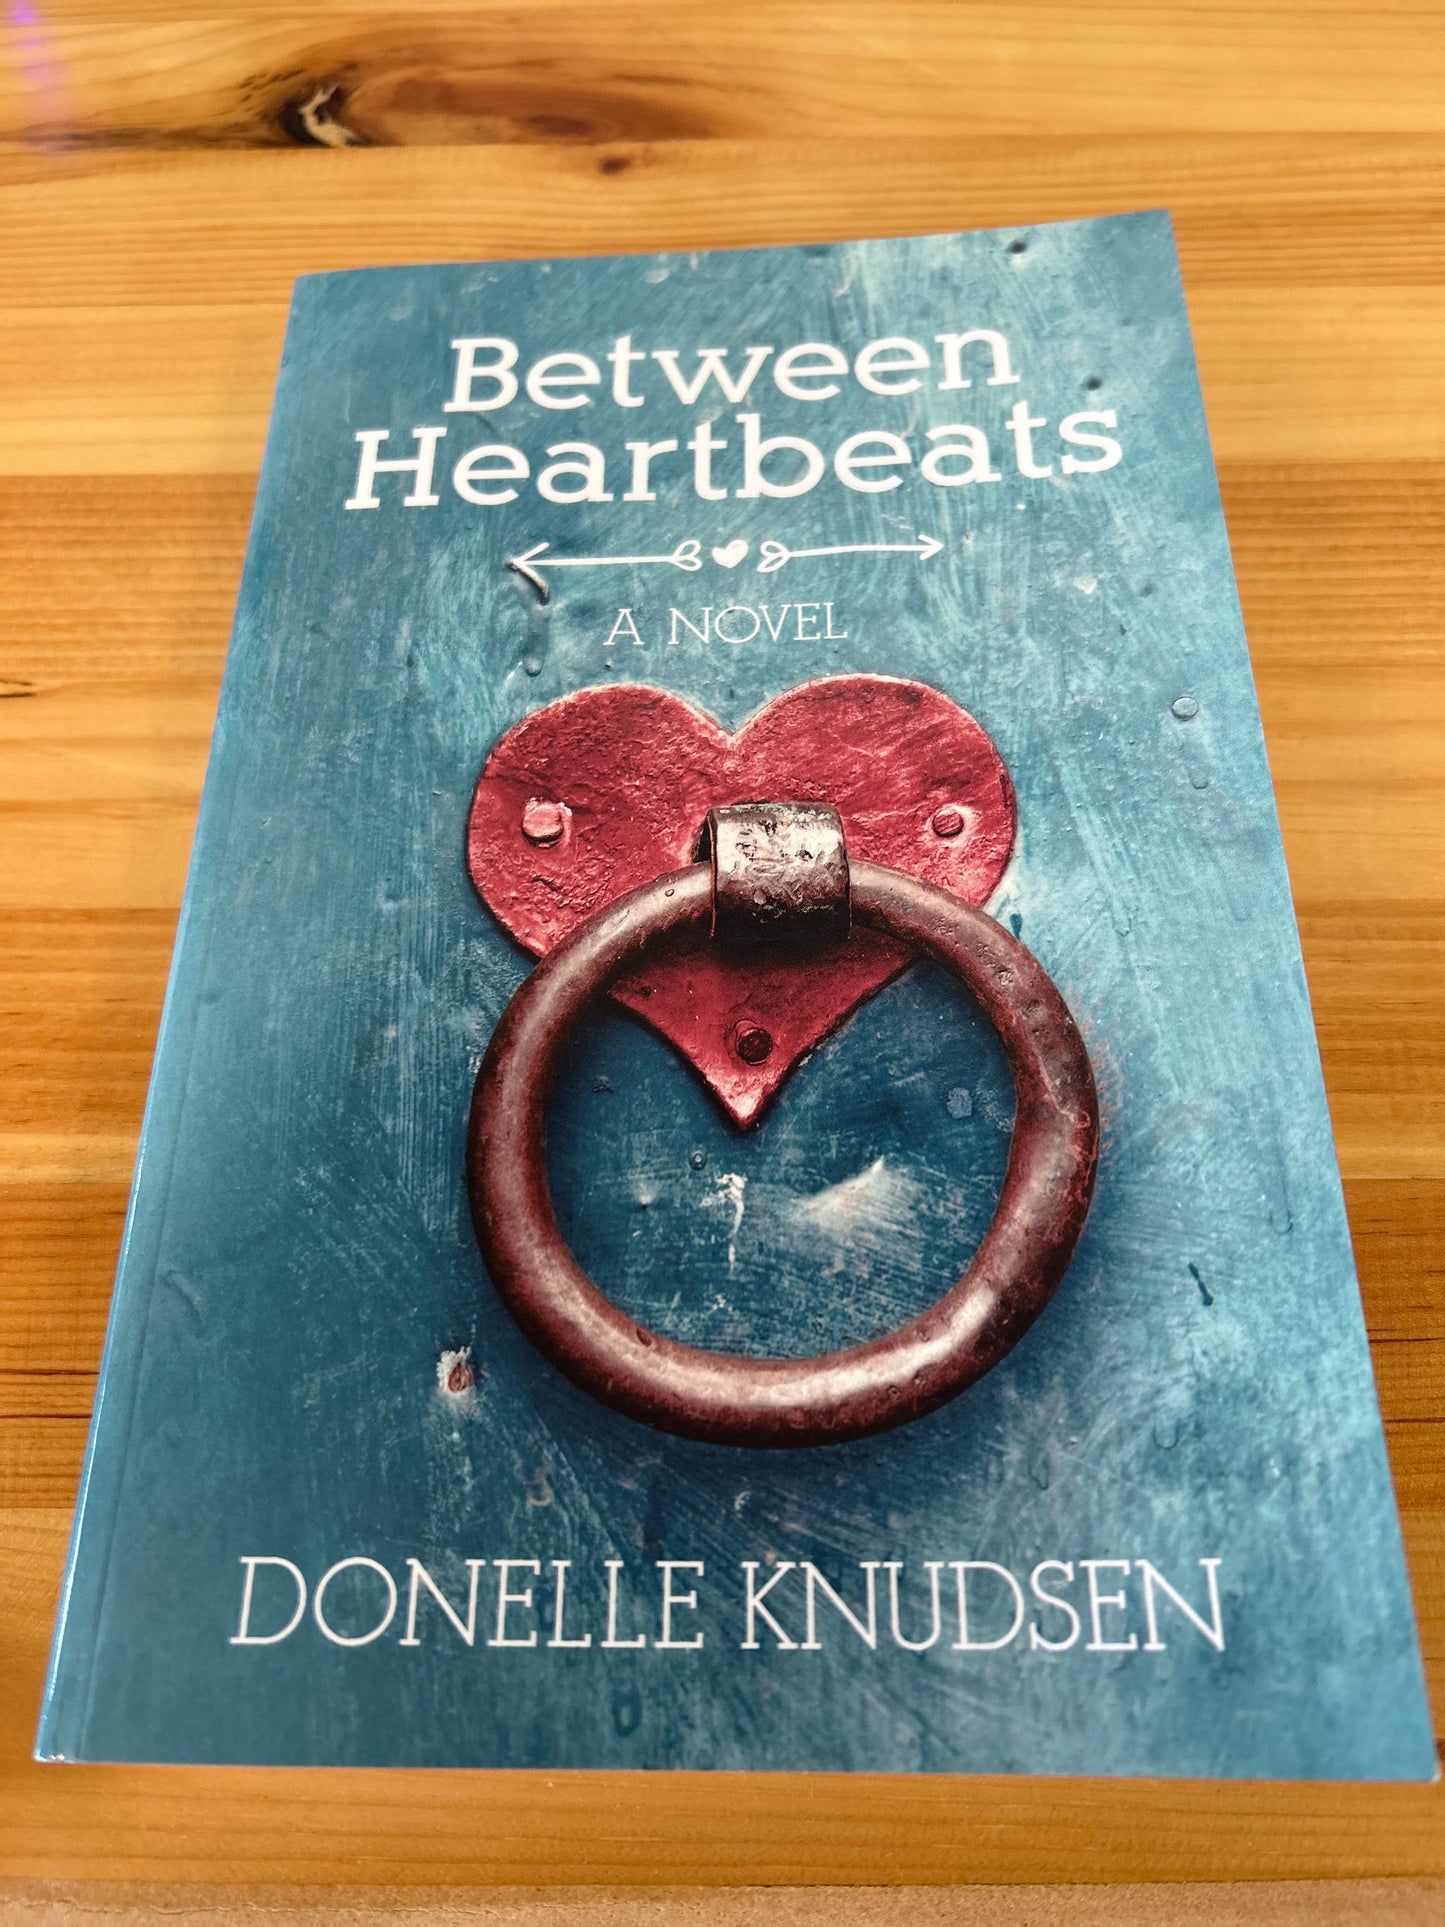 Donelle Knudsen - Local Author*